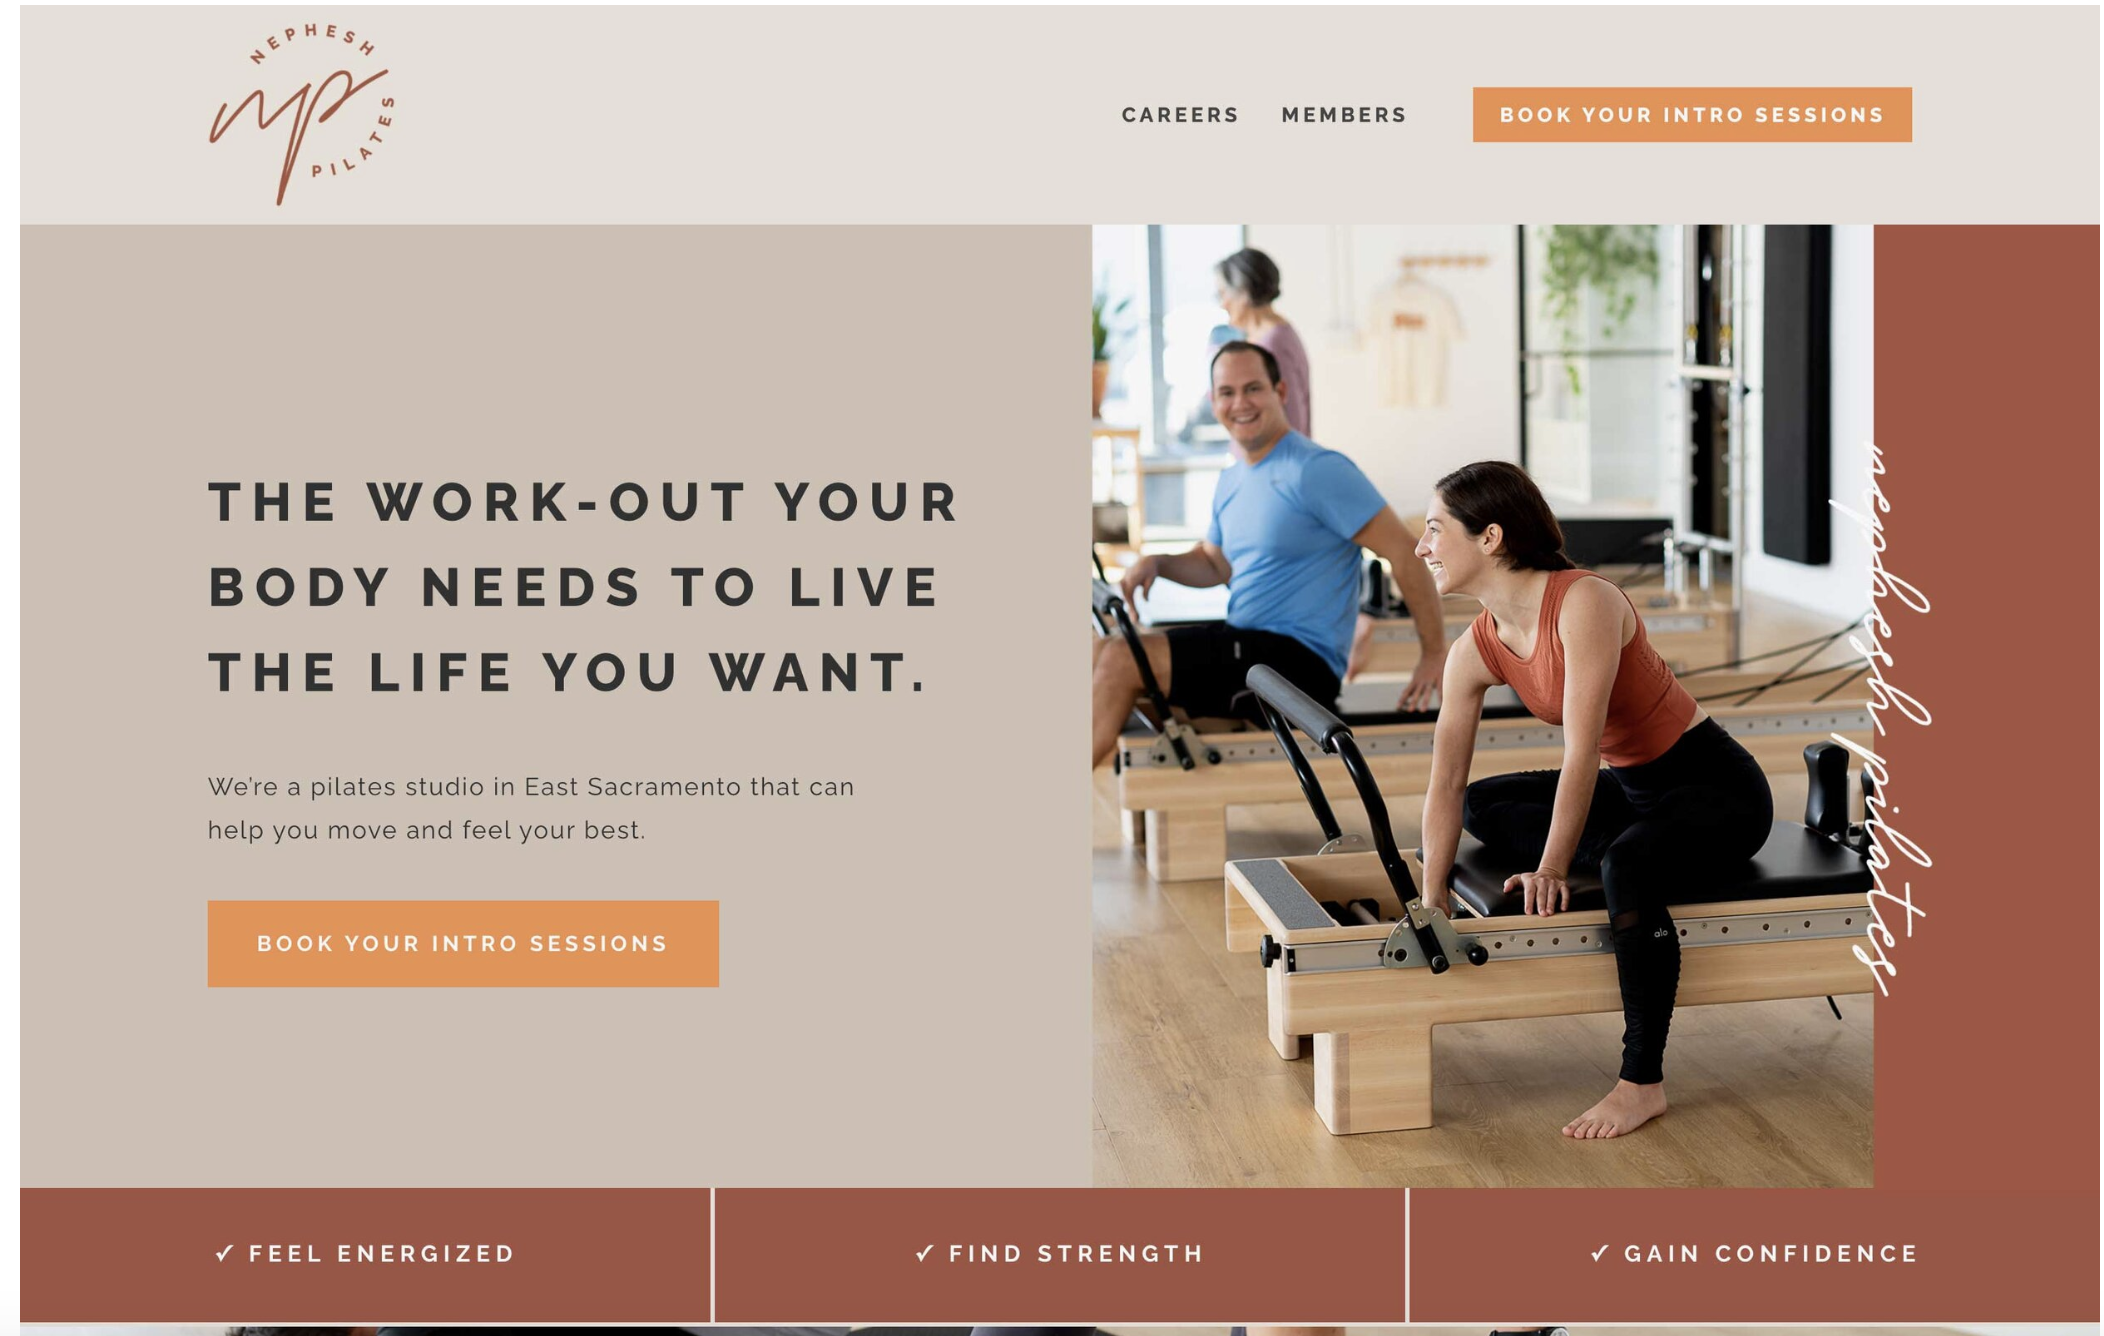 Vancouver wellness studio storybrand website